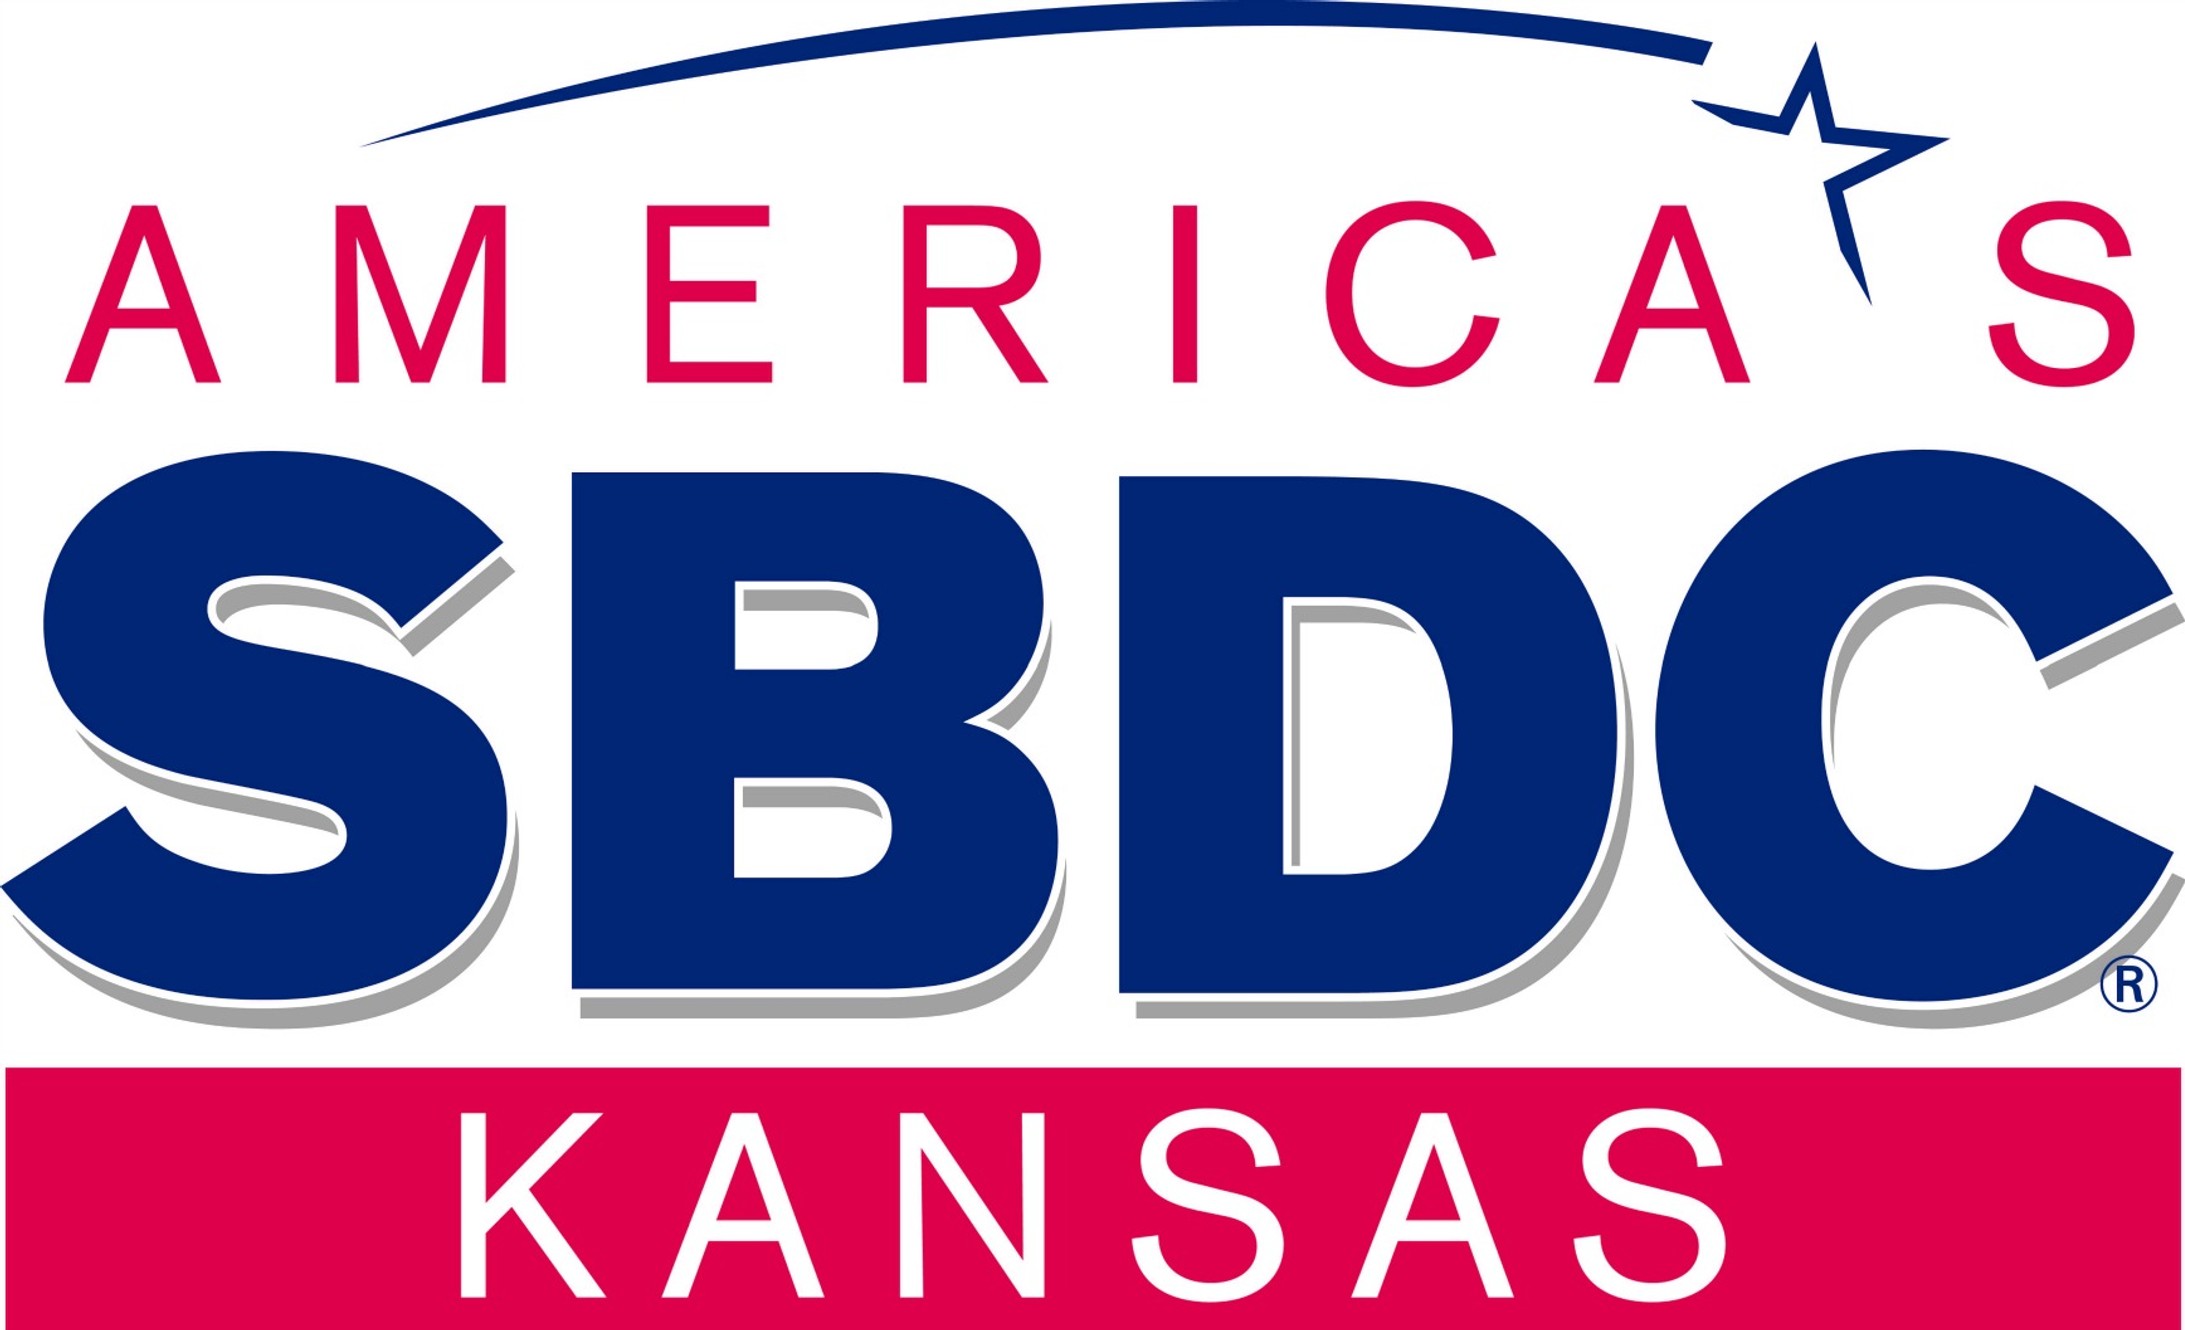 ASBDC Logo